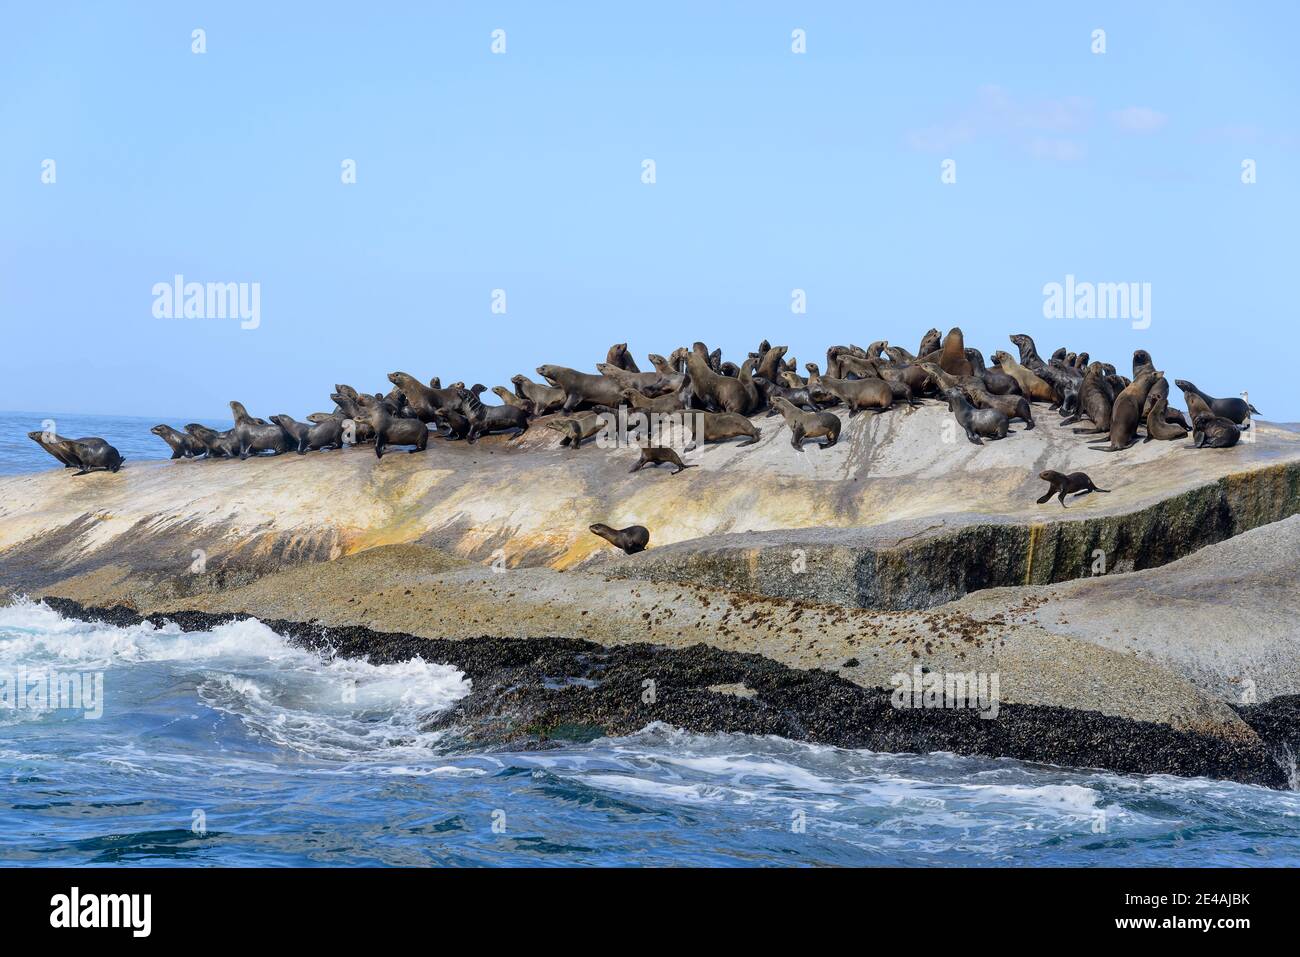 South African fur seal (Arctocephalus pusillus pusillus), colony of fur seals on rocks in the sea, False Bay, Simons Town, South Africa, Indian Ocean Stock Photo